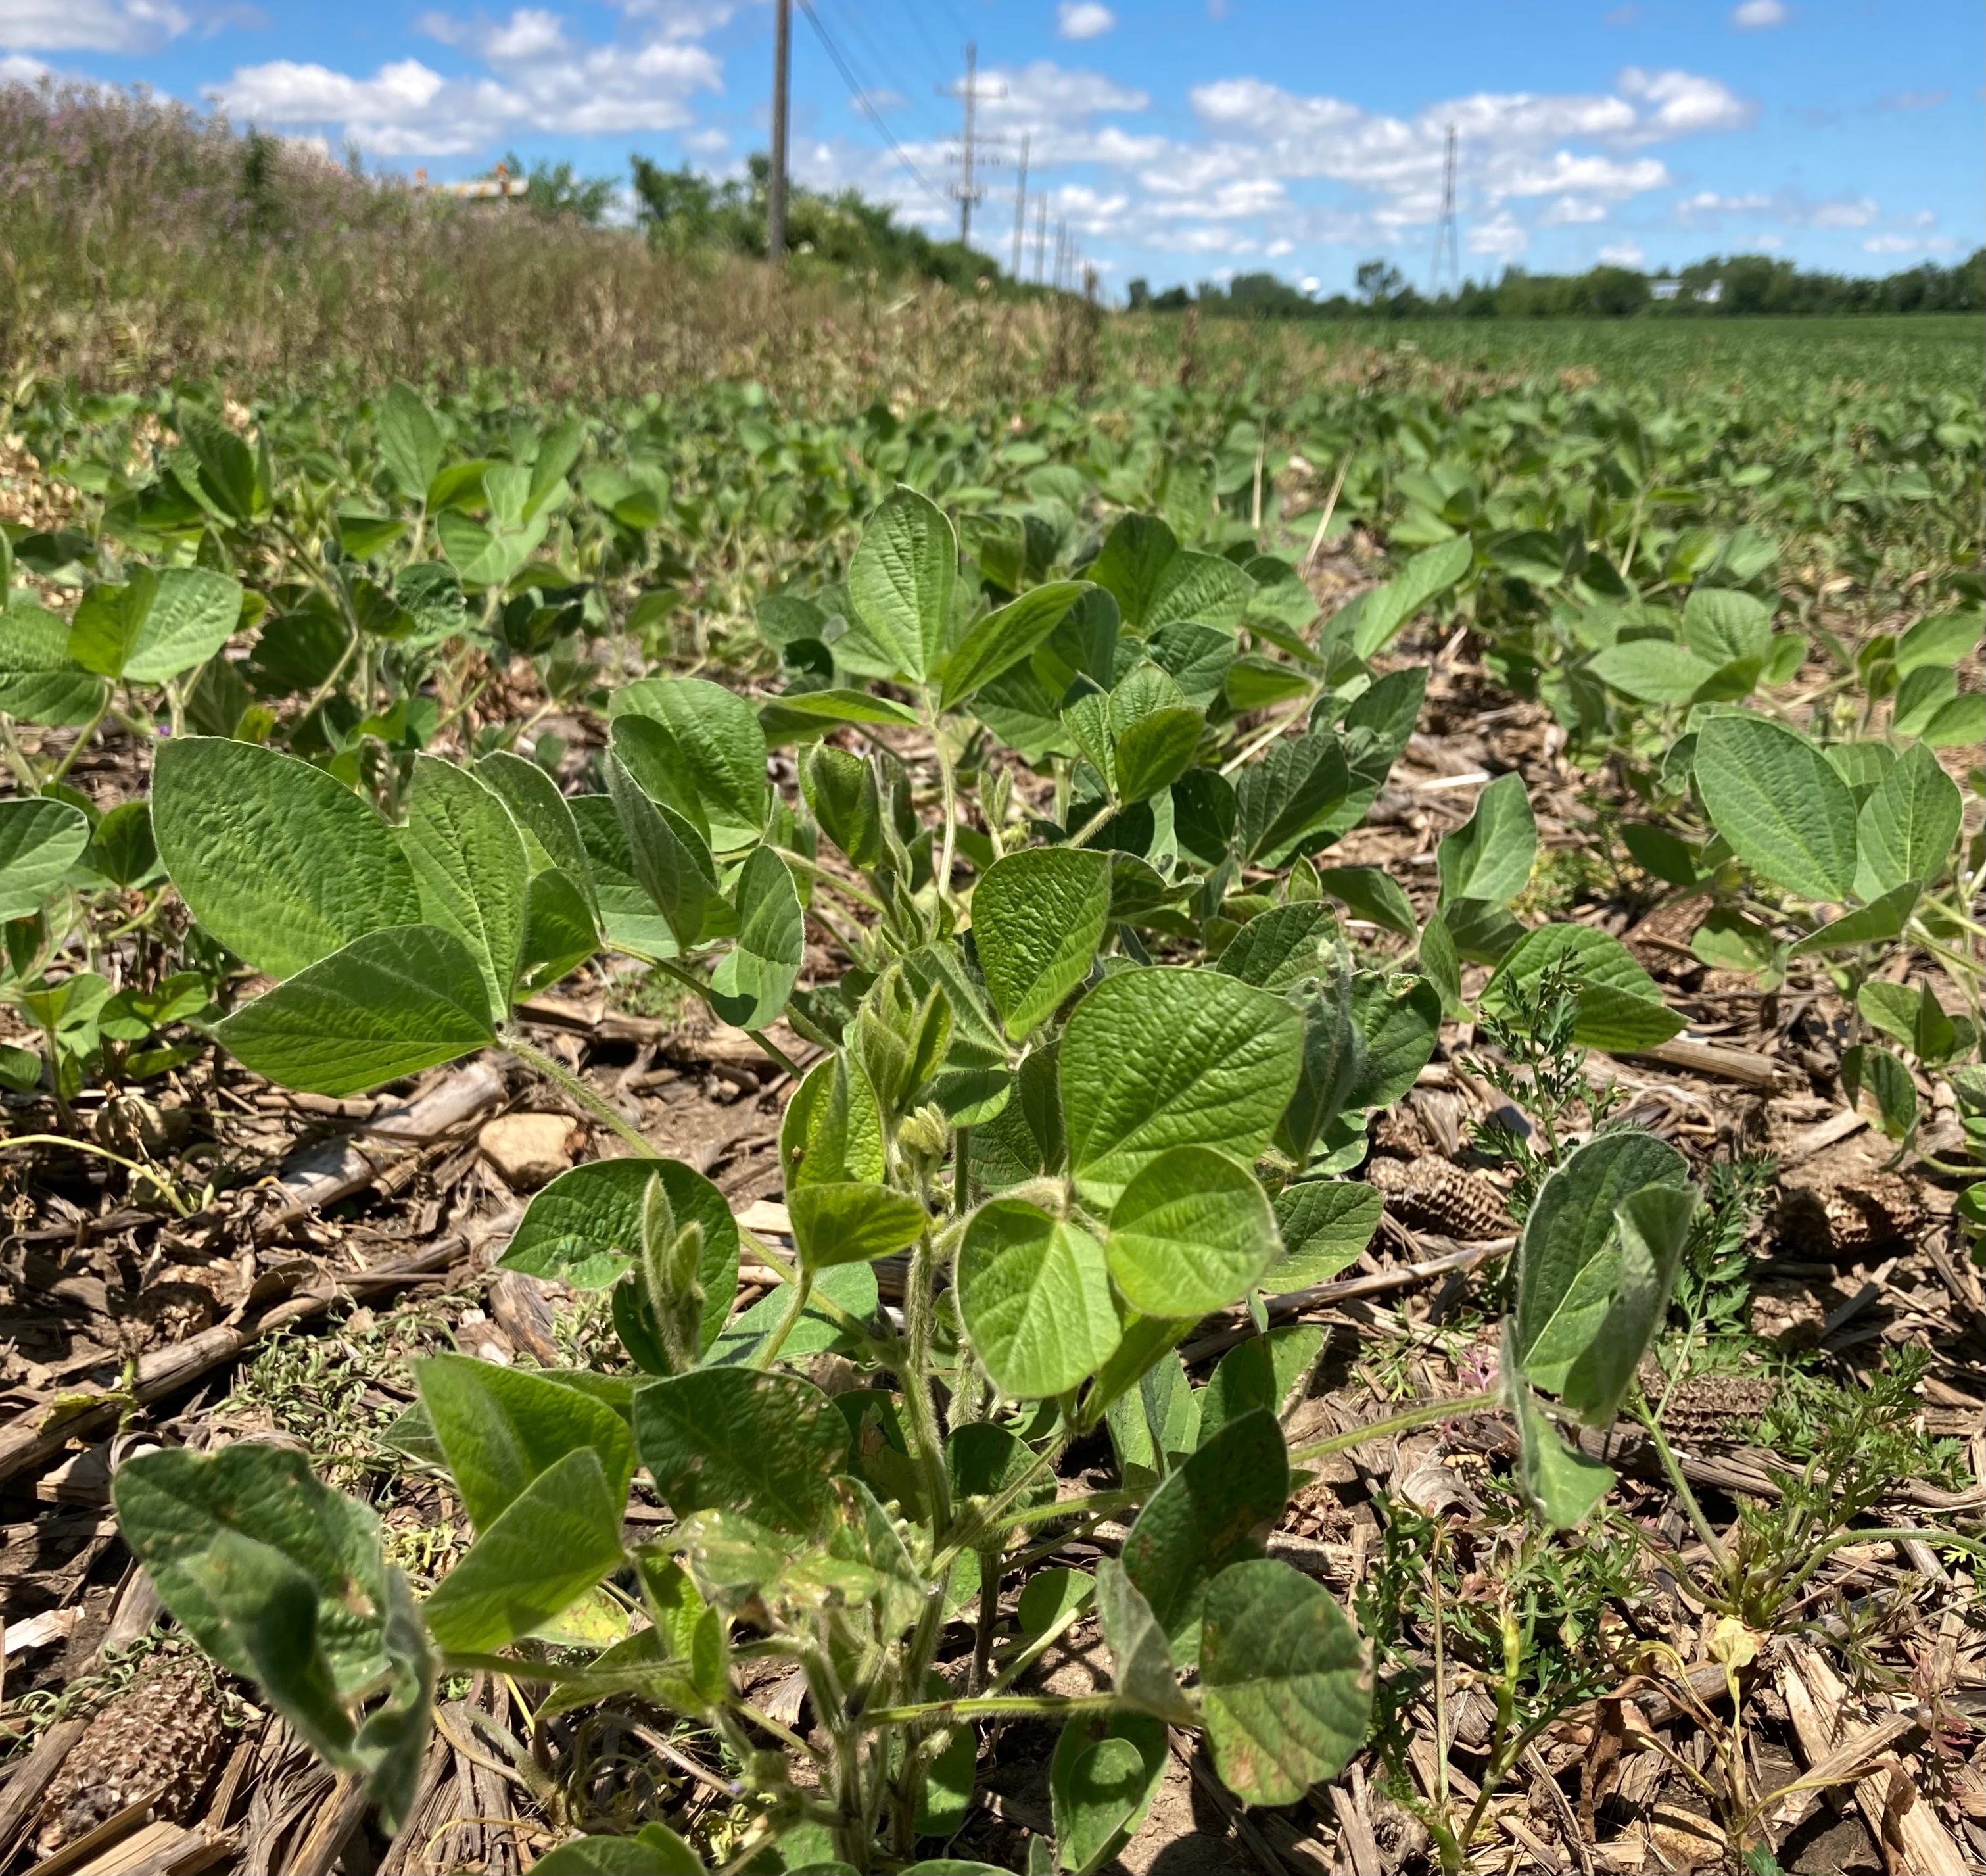 Indiana crop progress for the week ending June 23